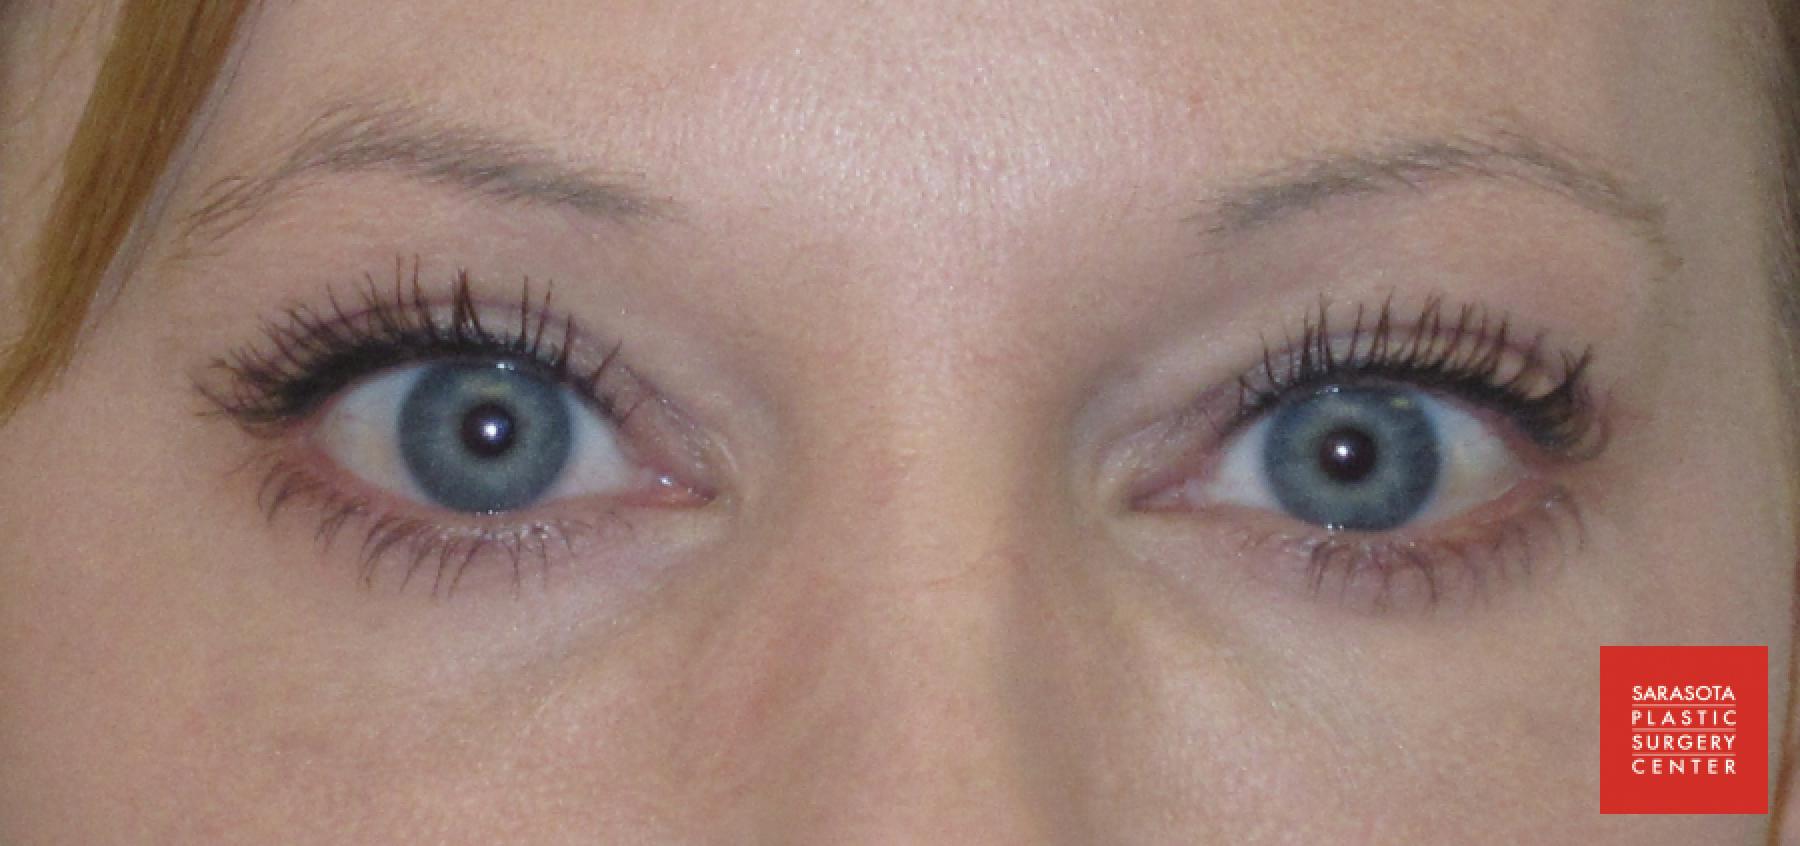 Permanent Makeup - Eyeliner: Patient 1 - After  